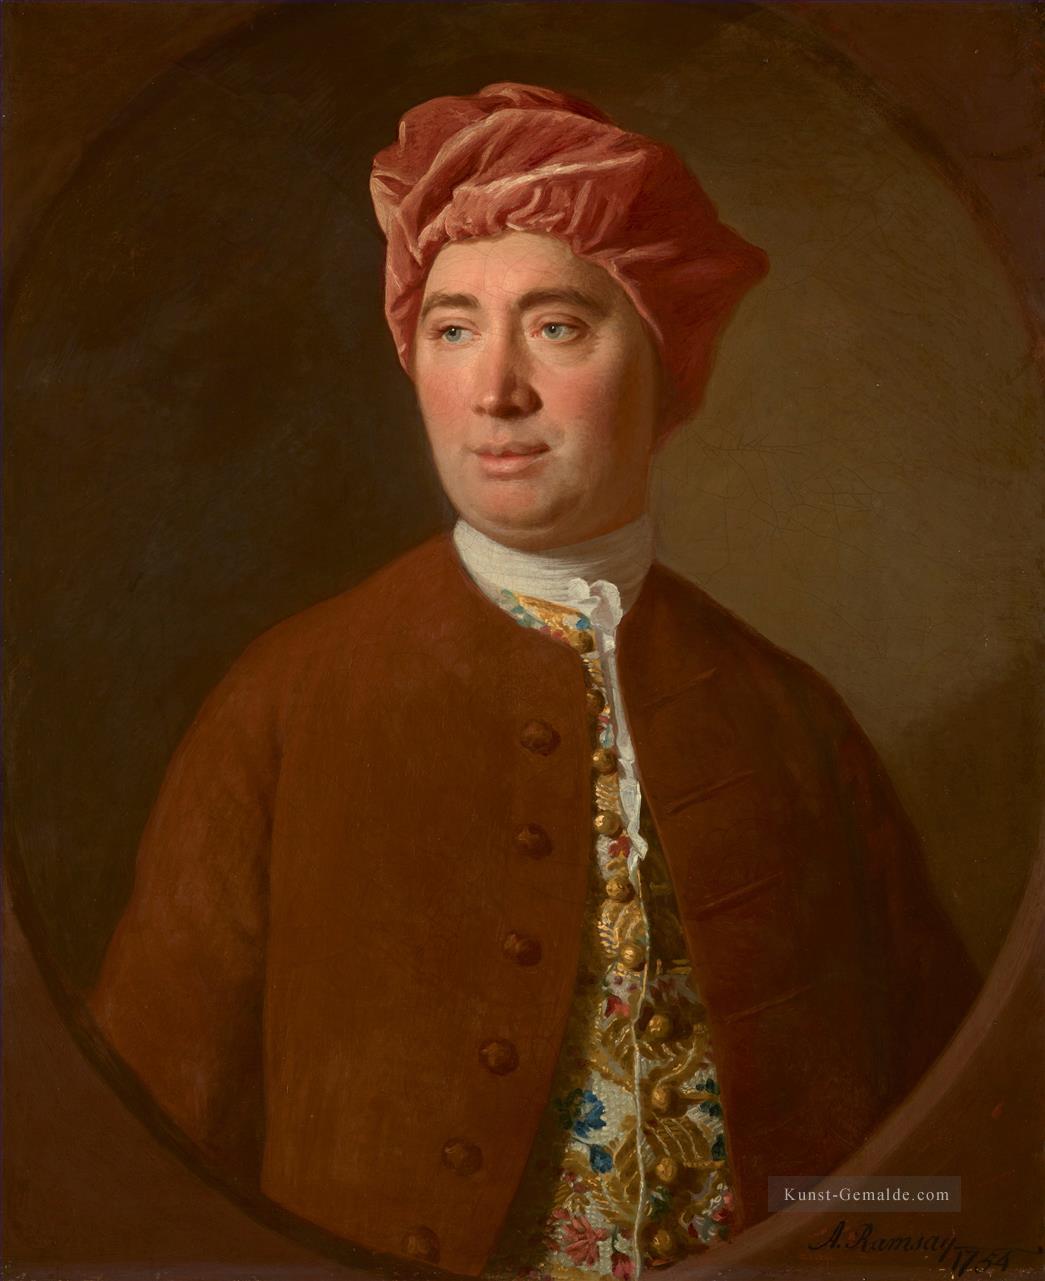 Porträt von David Hume Allan Ramsay Portrait Klassiker Ölgemälde